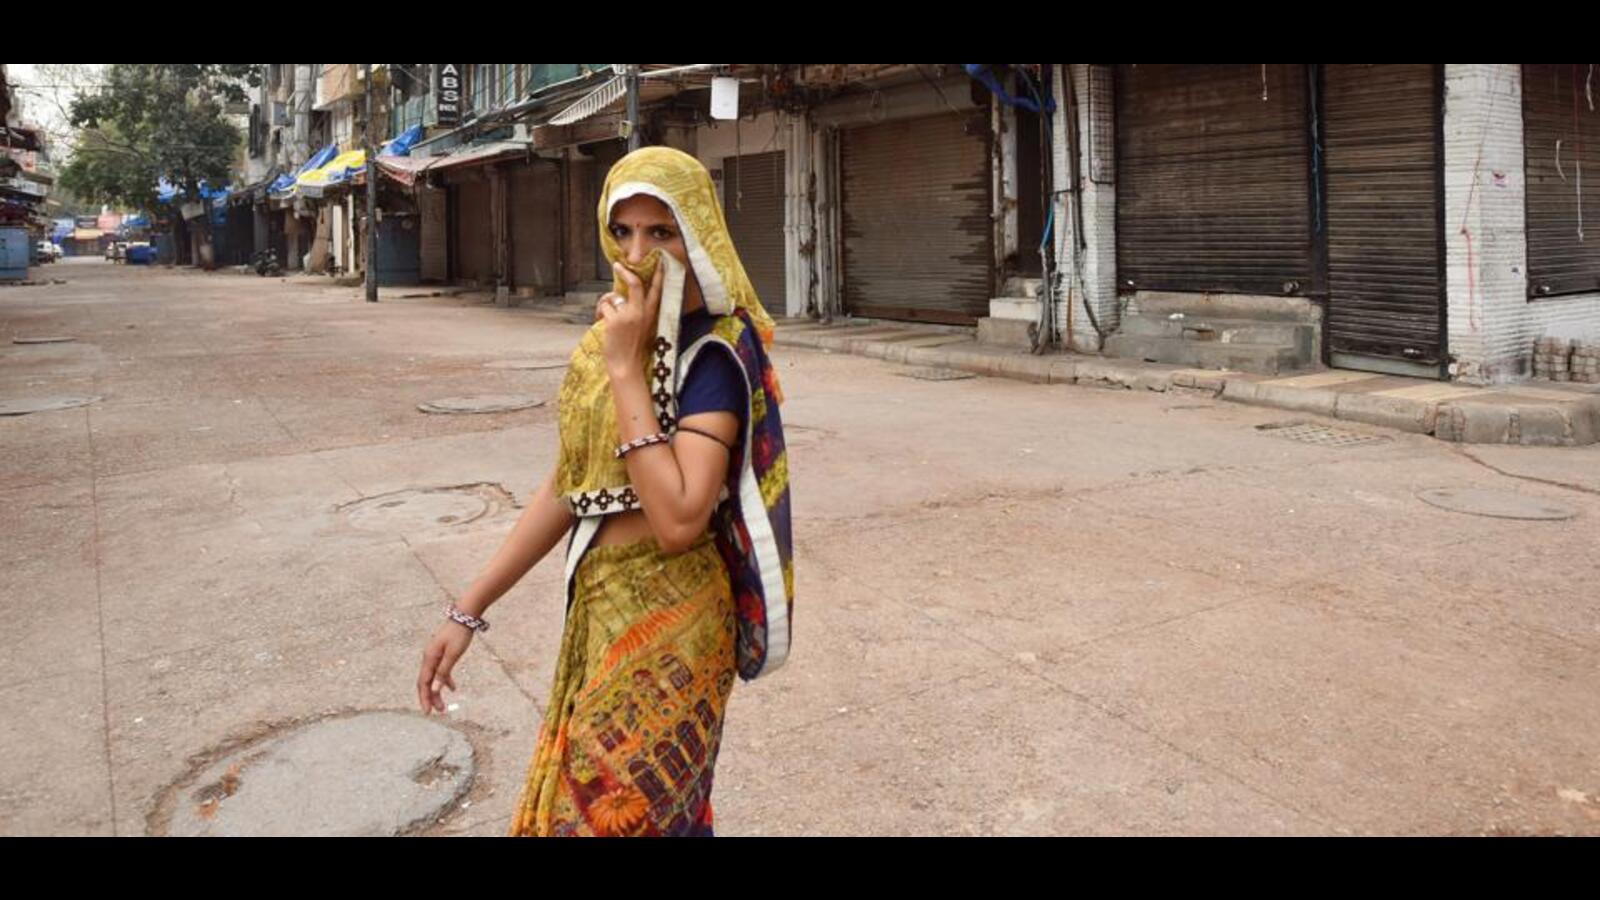 Marital rape: The State must protect women - Hindustan Times